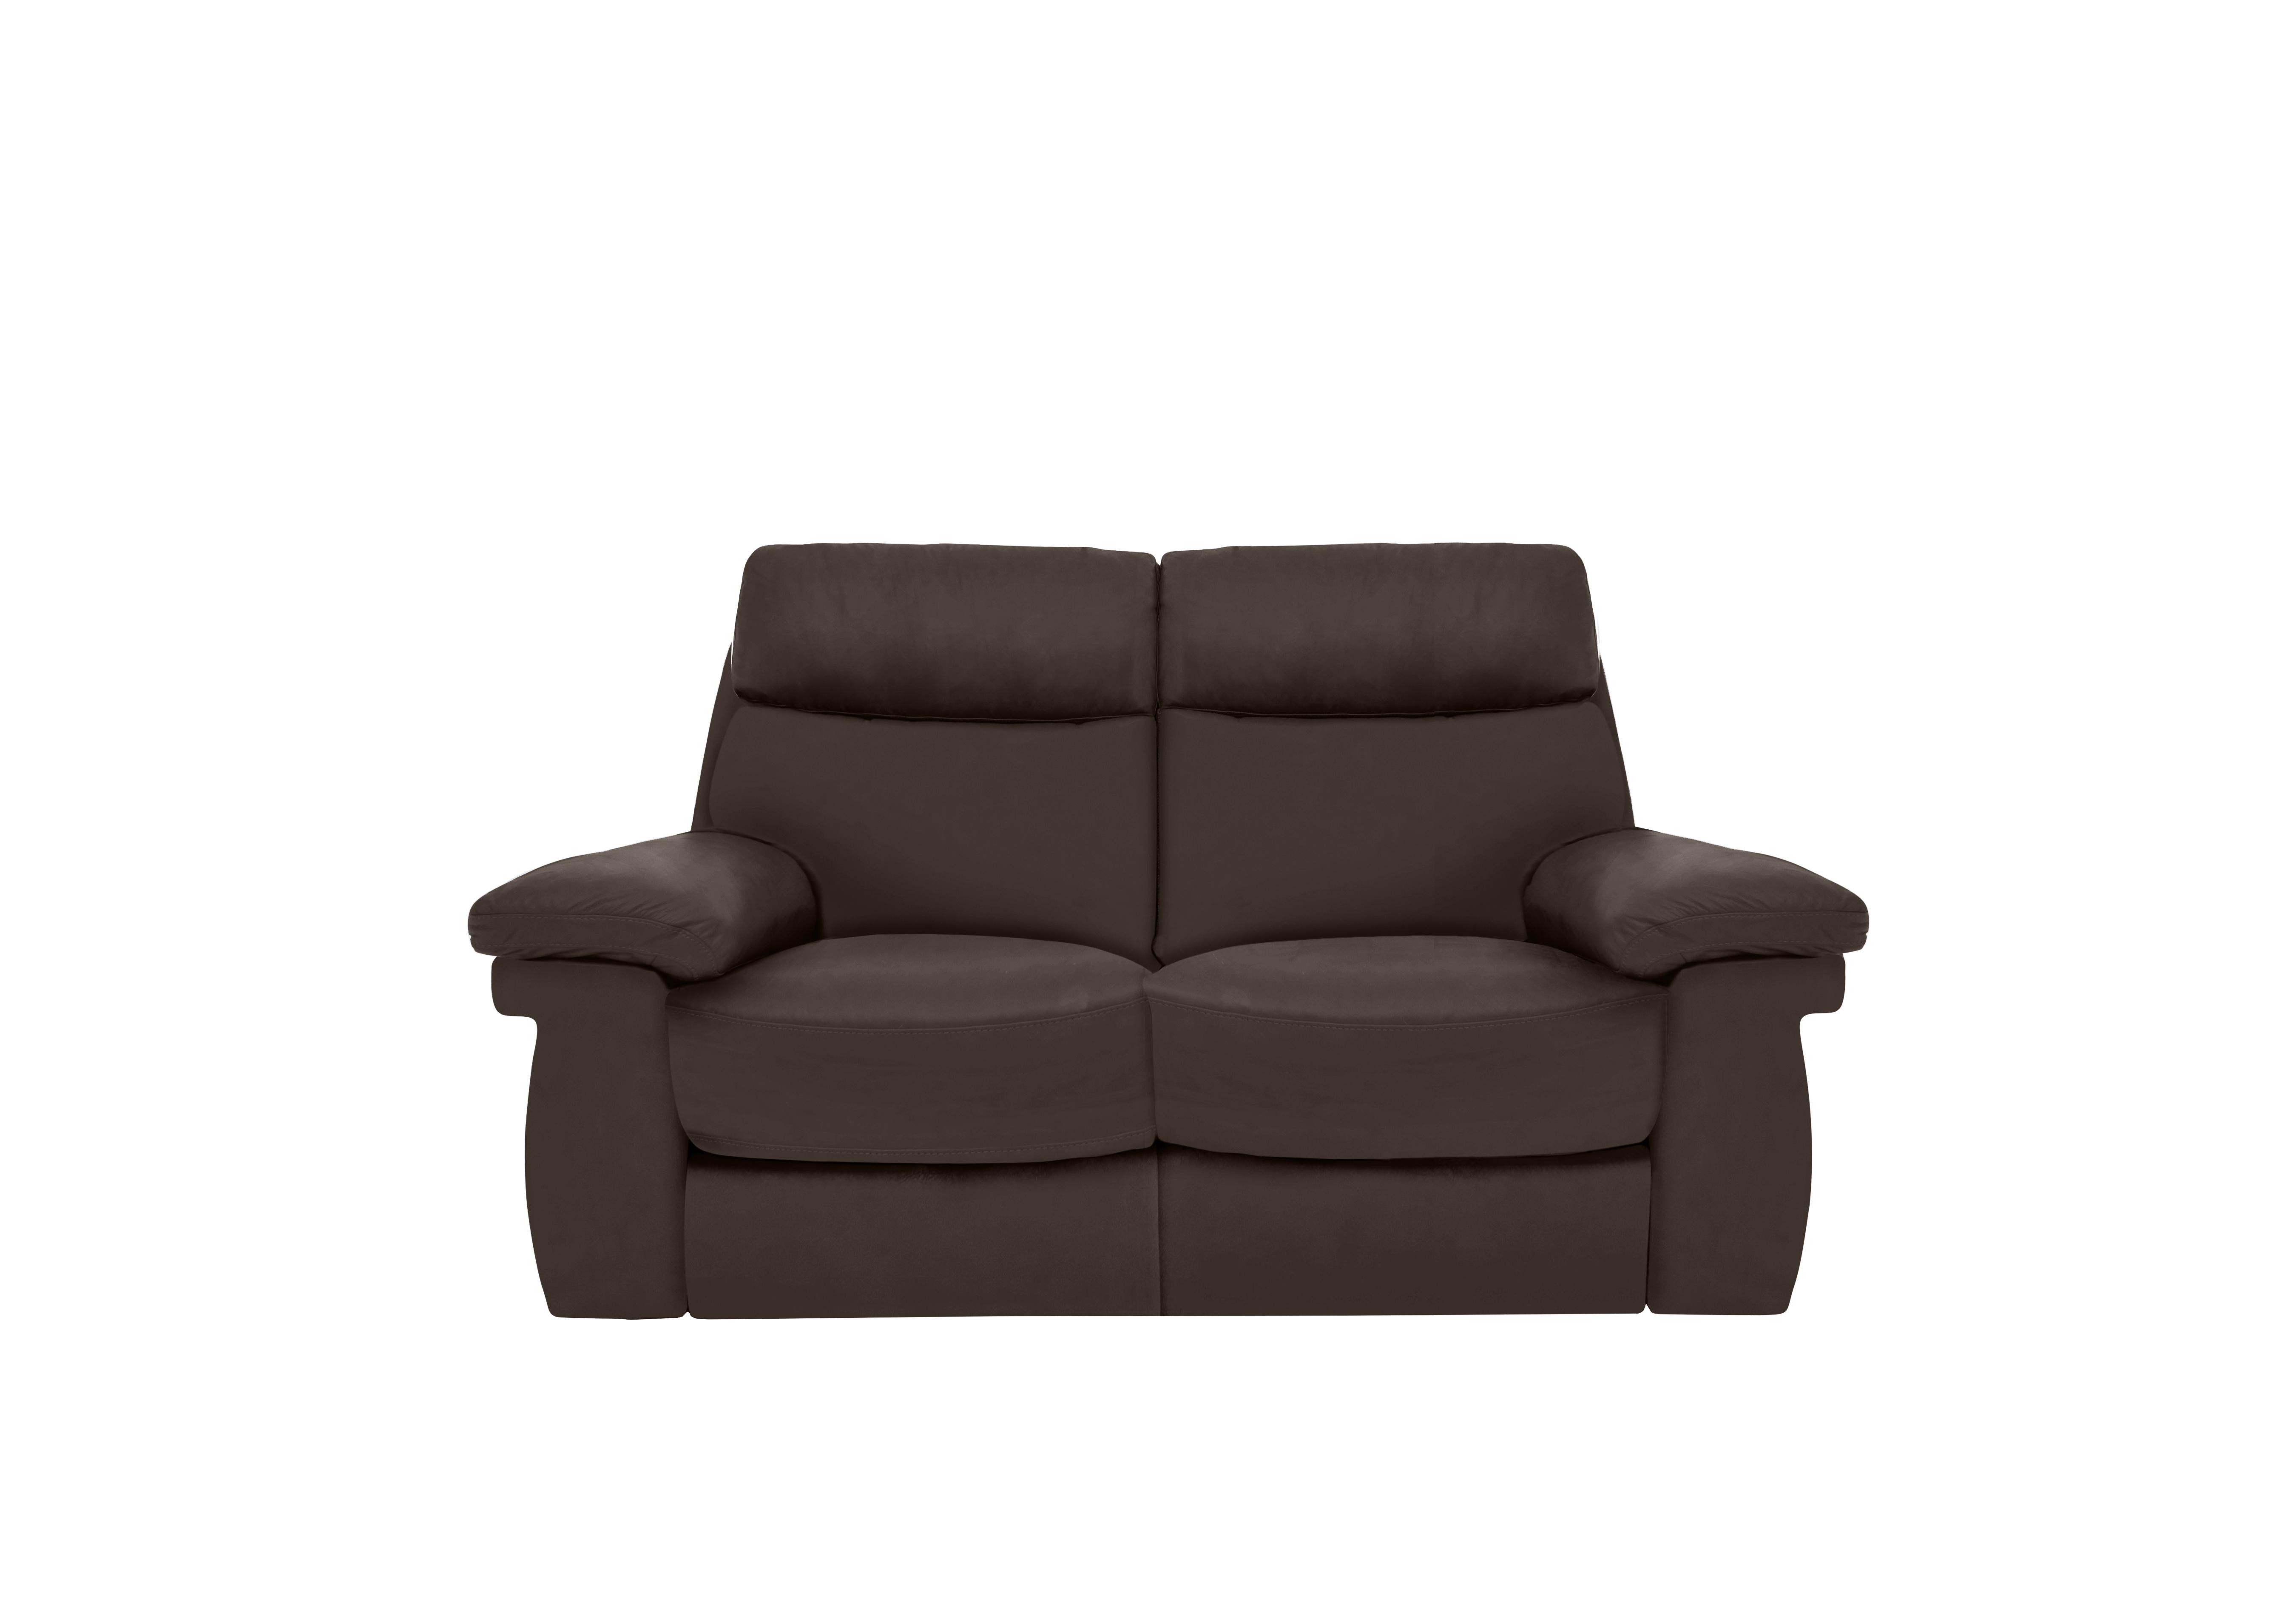 Serene 2 Seater Leather Sofa in Bx-037c Walnut on Furniture Village